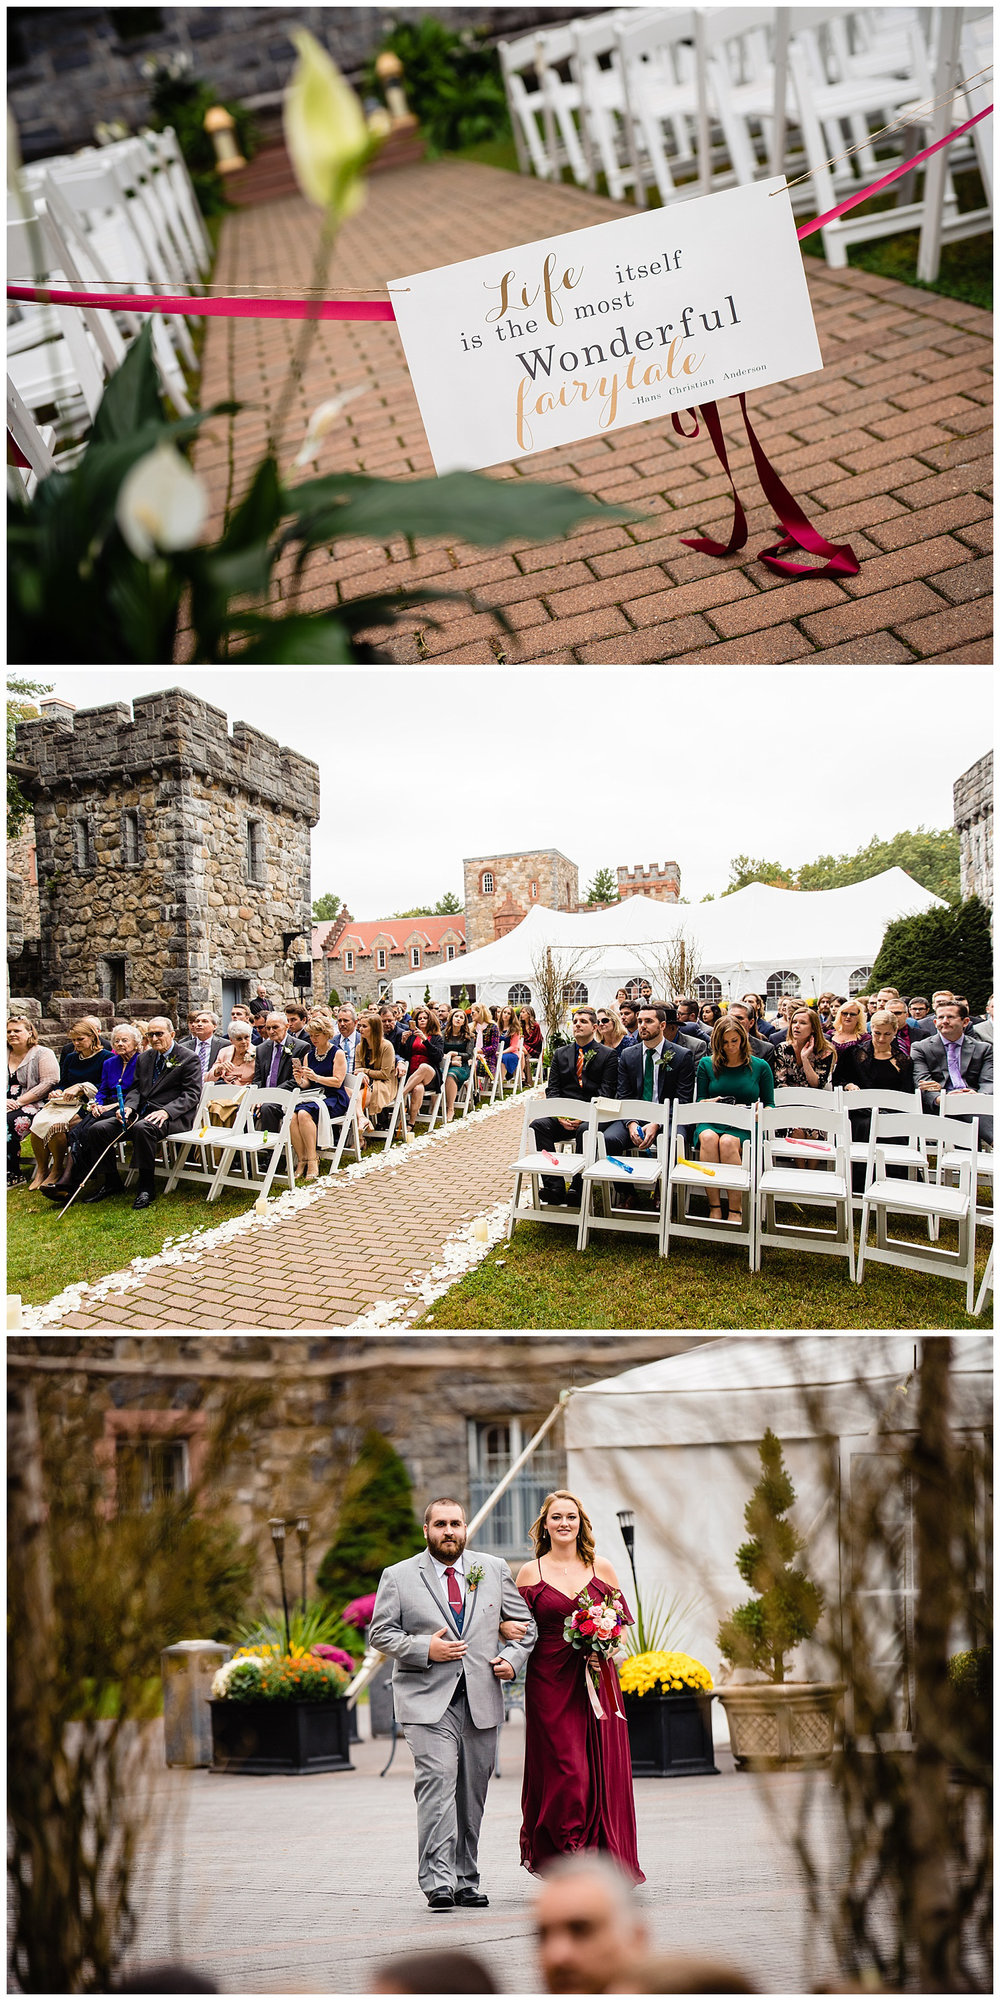 Searles Castle Wedding Photography